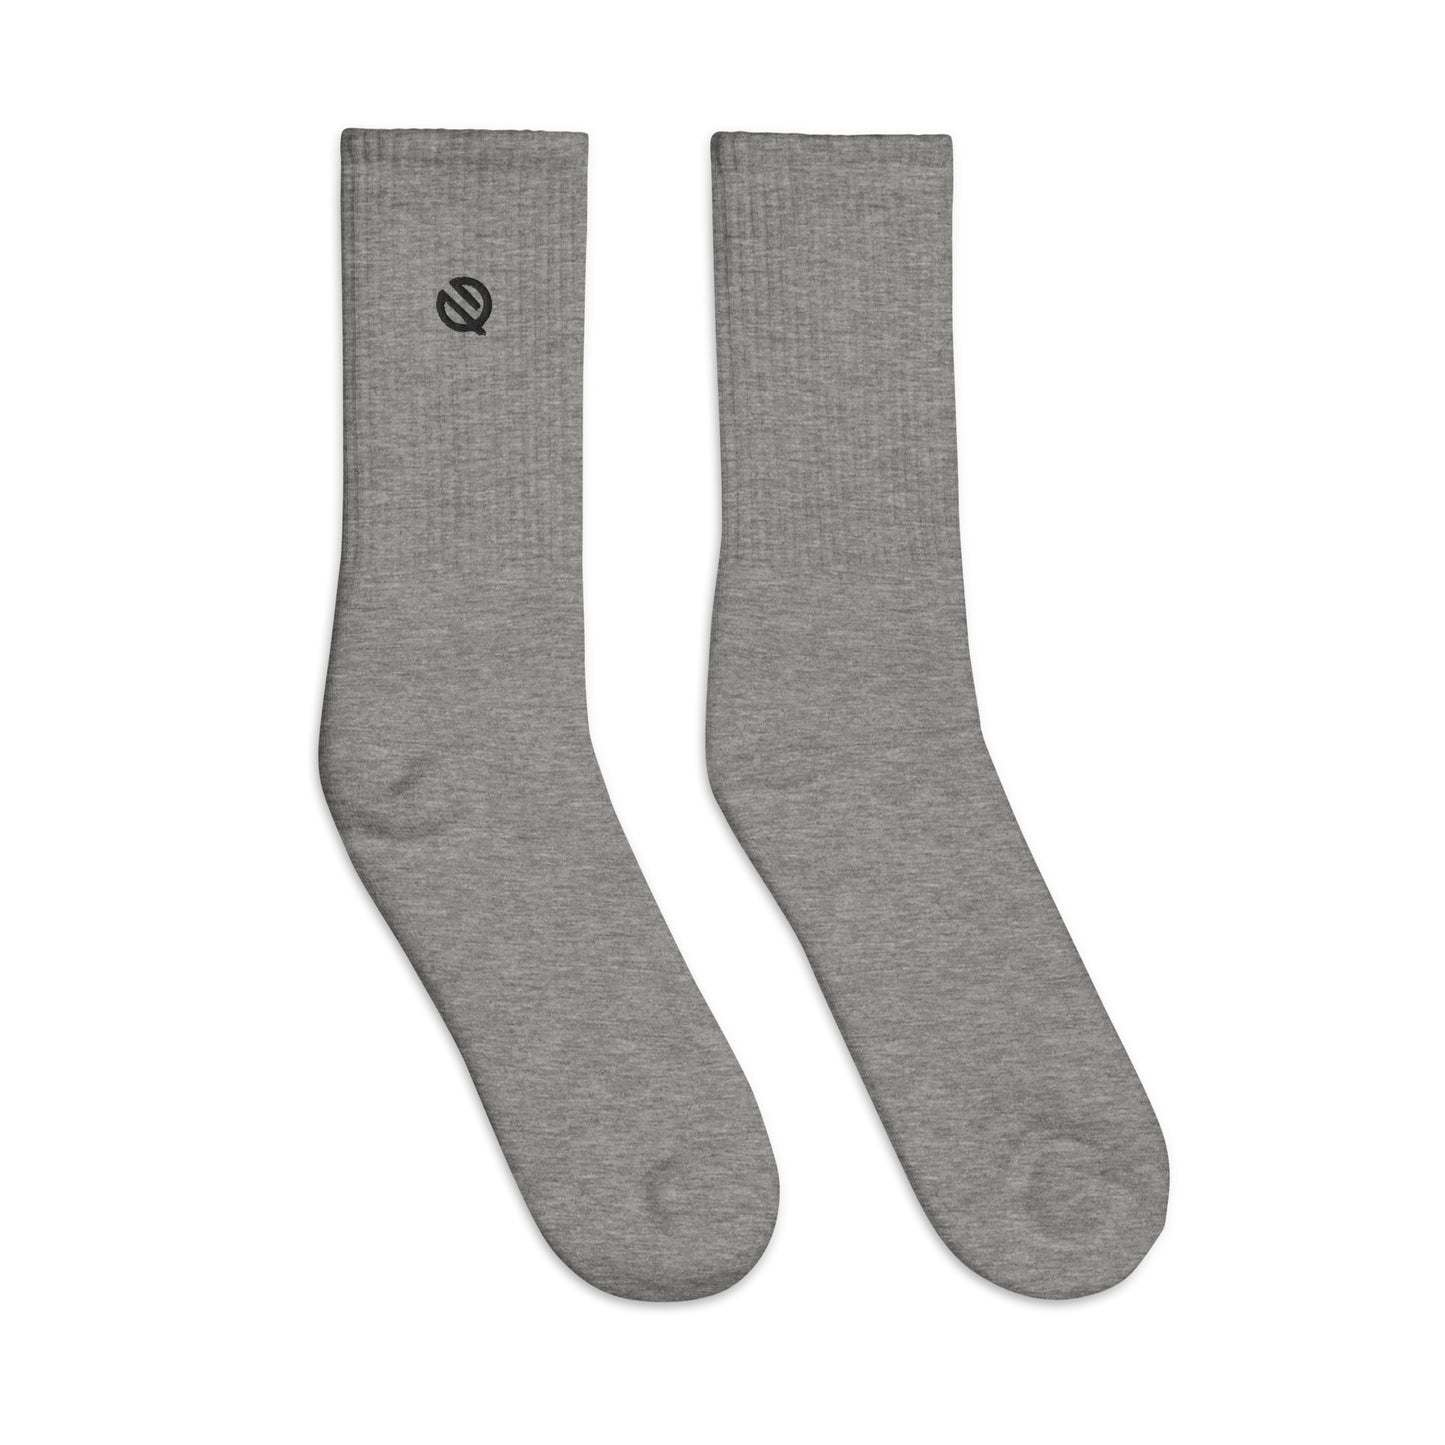 Q Embroidered socks